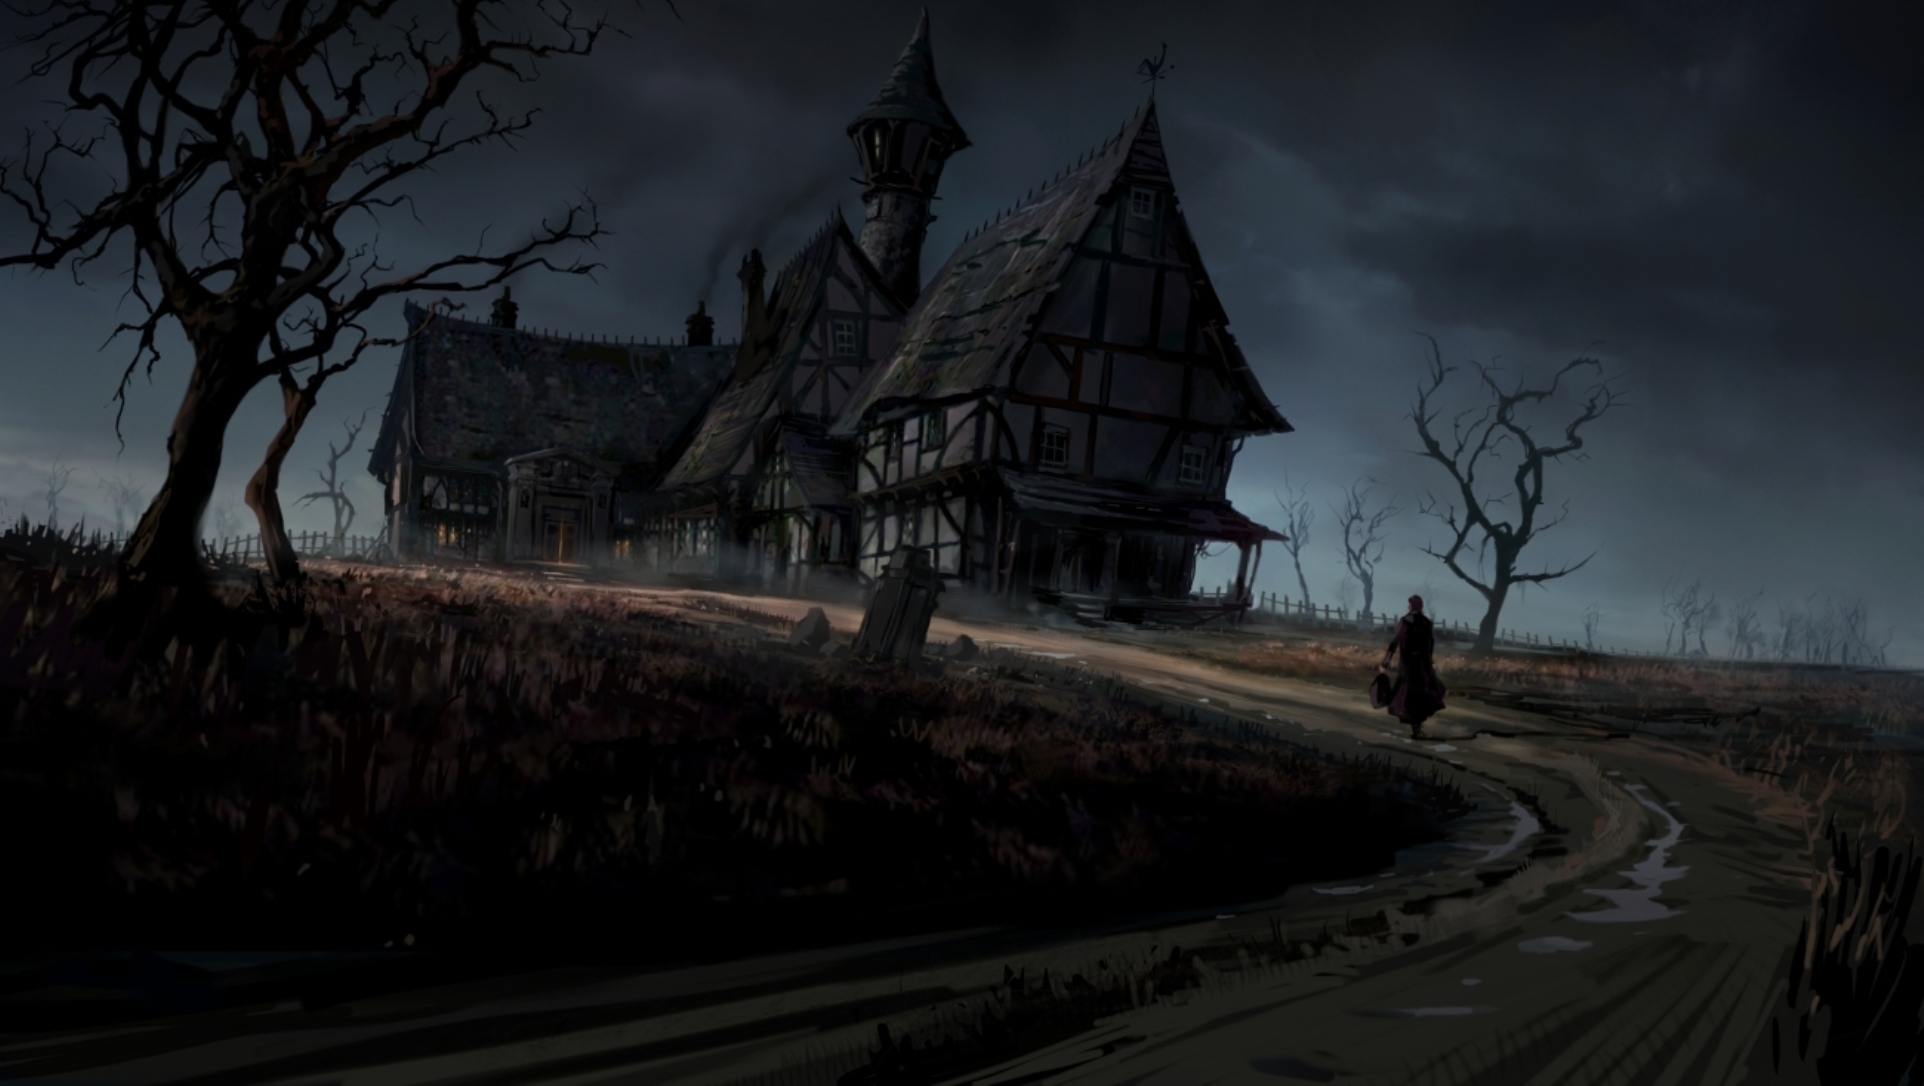 Dark Haunted Horror Gothic House Storm Rain Art Wallpaper Background